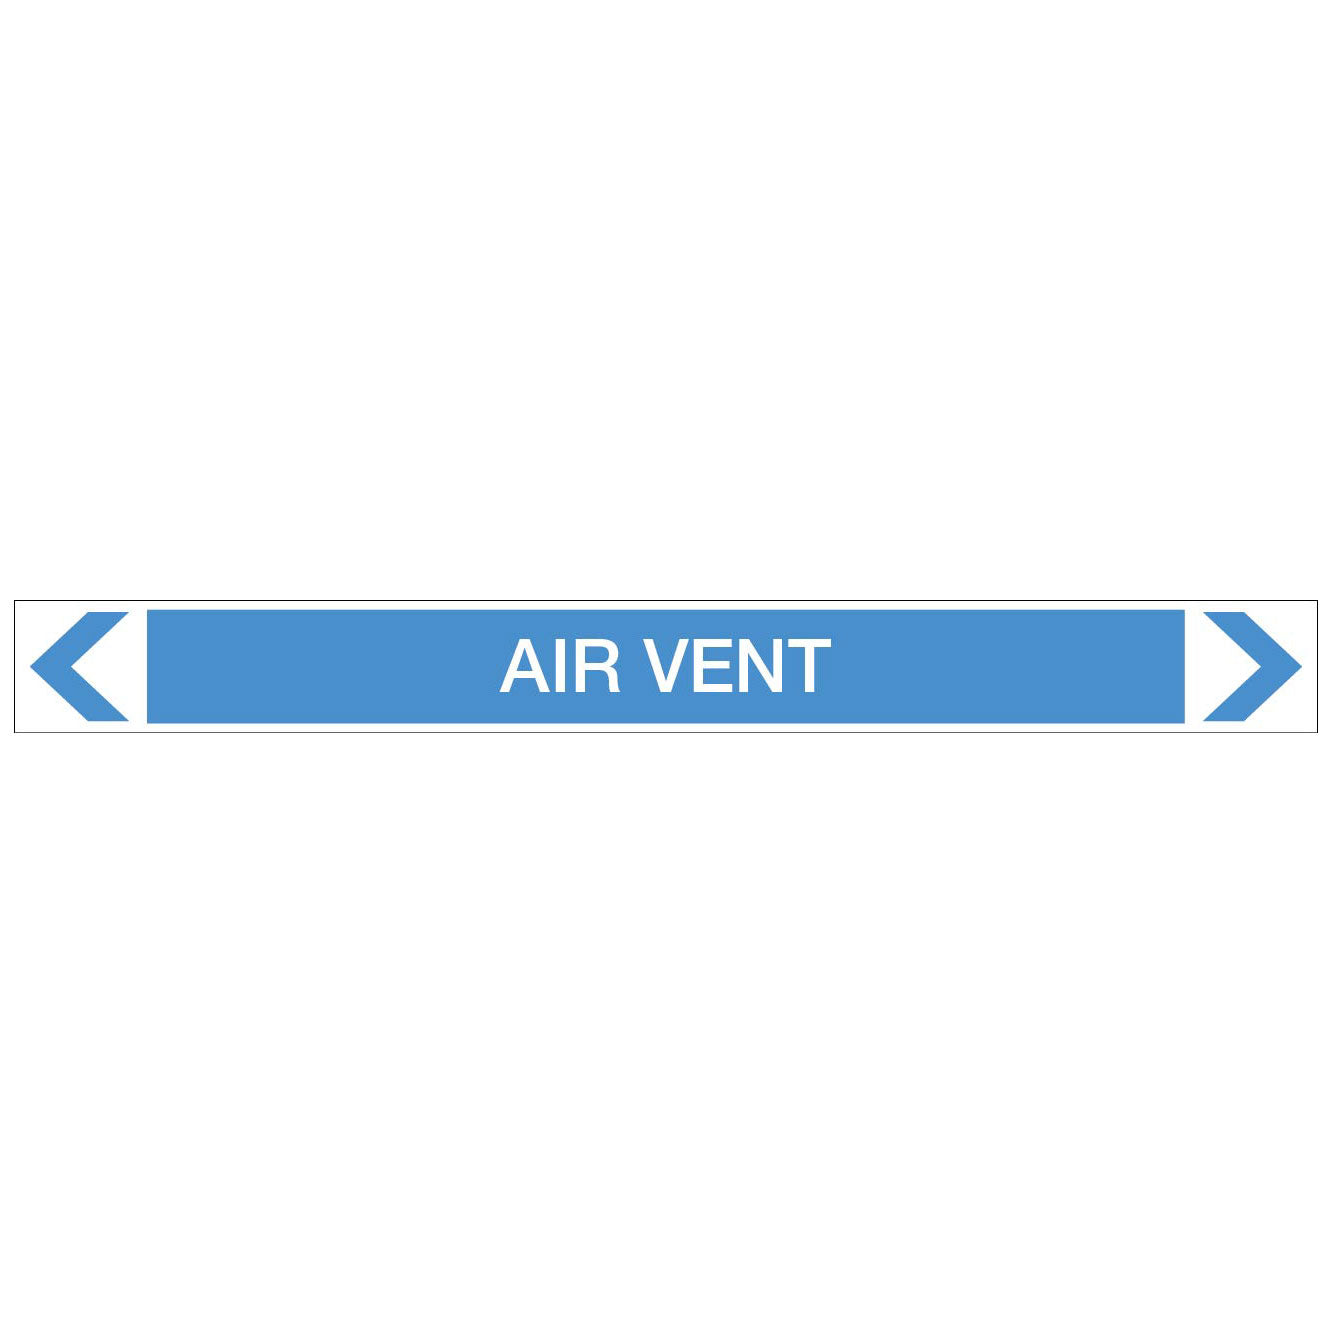 Air - Air Vent - Pipe Marker Sticker